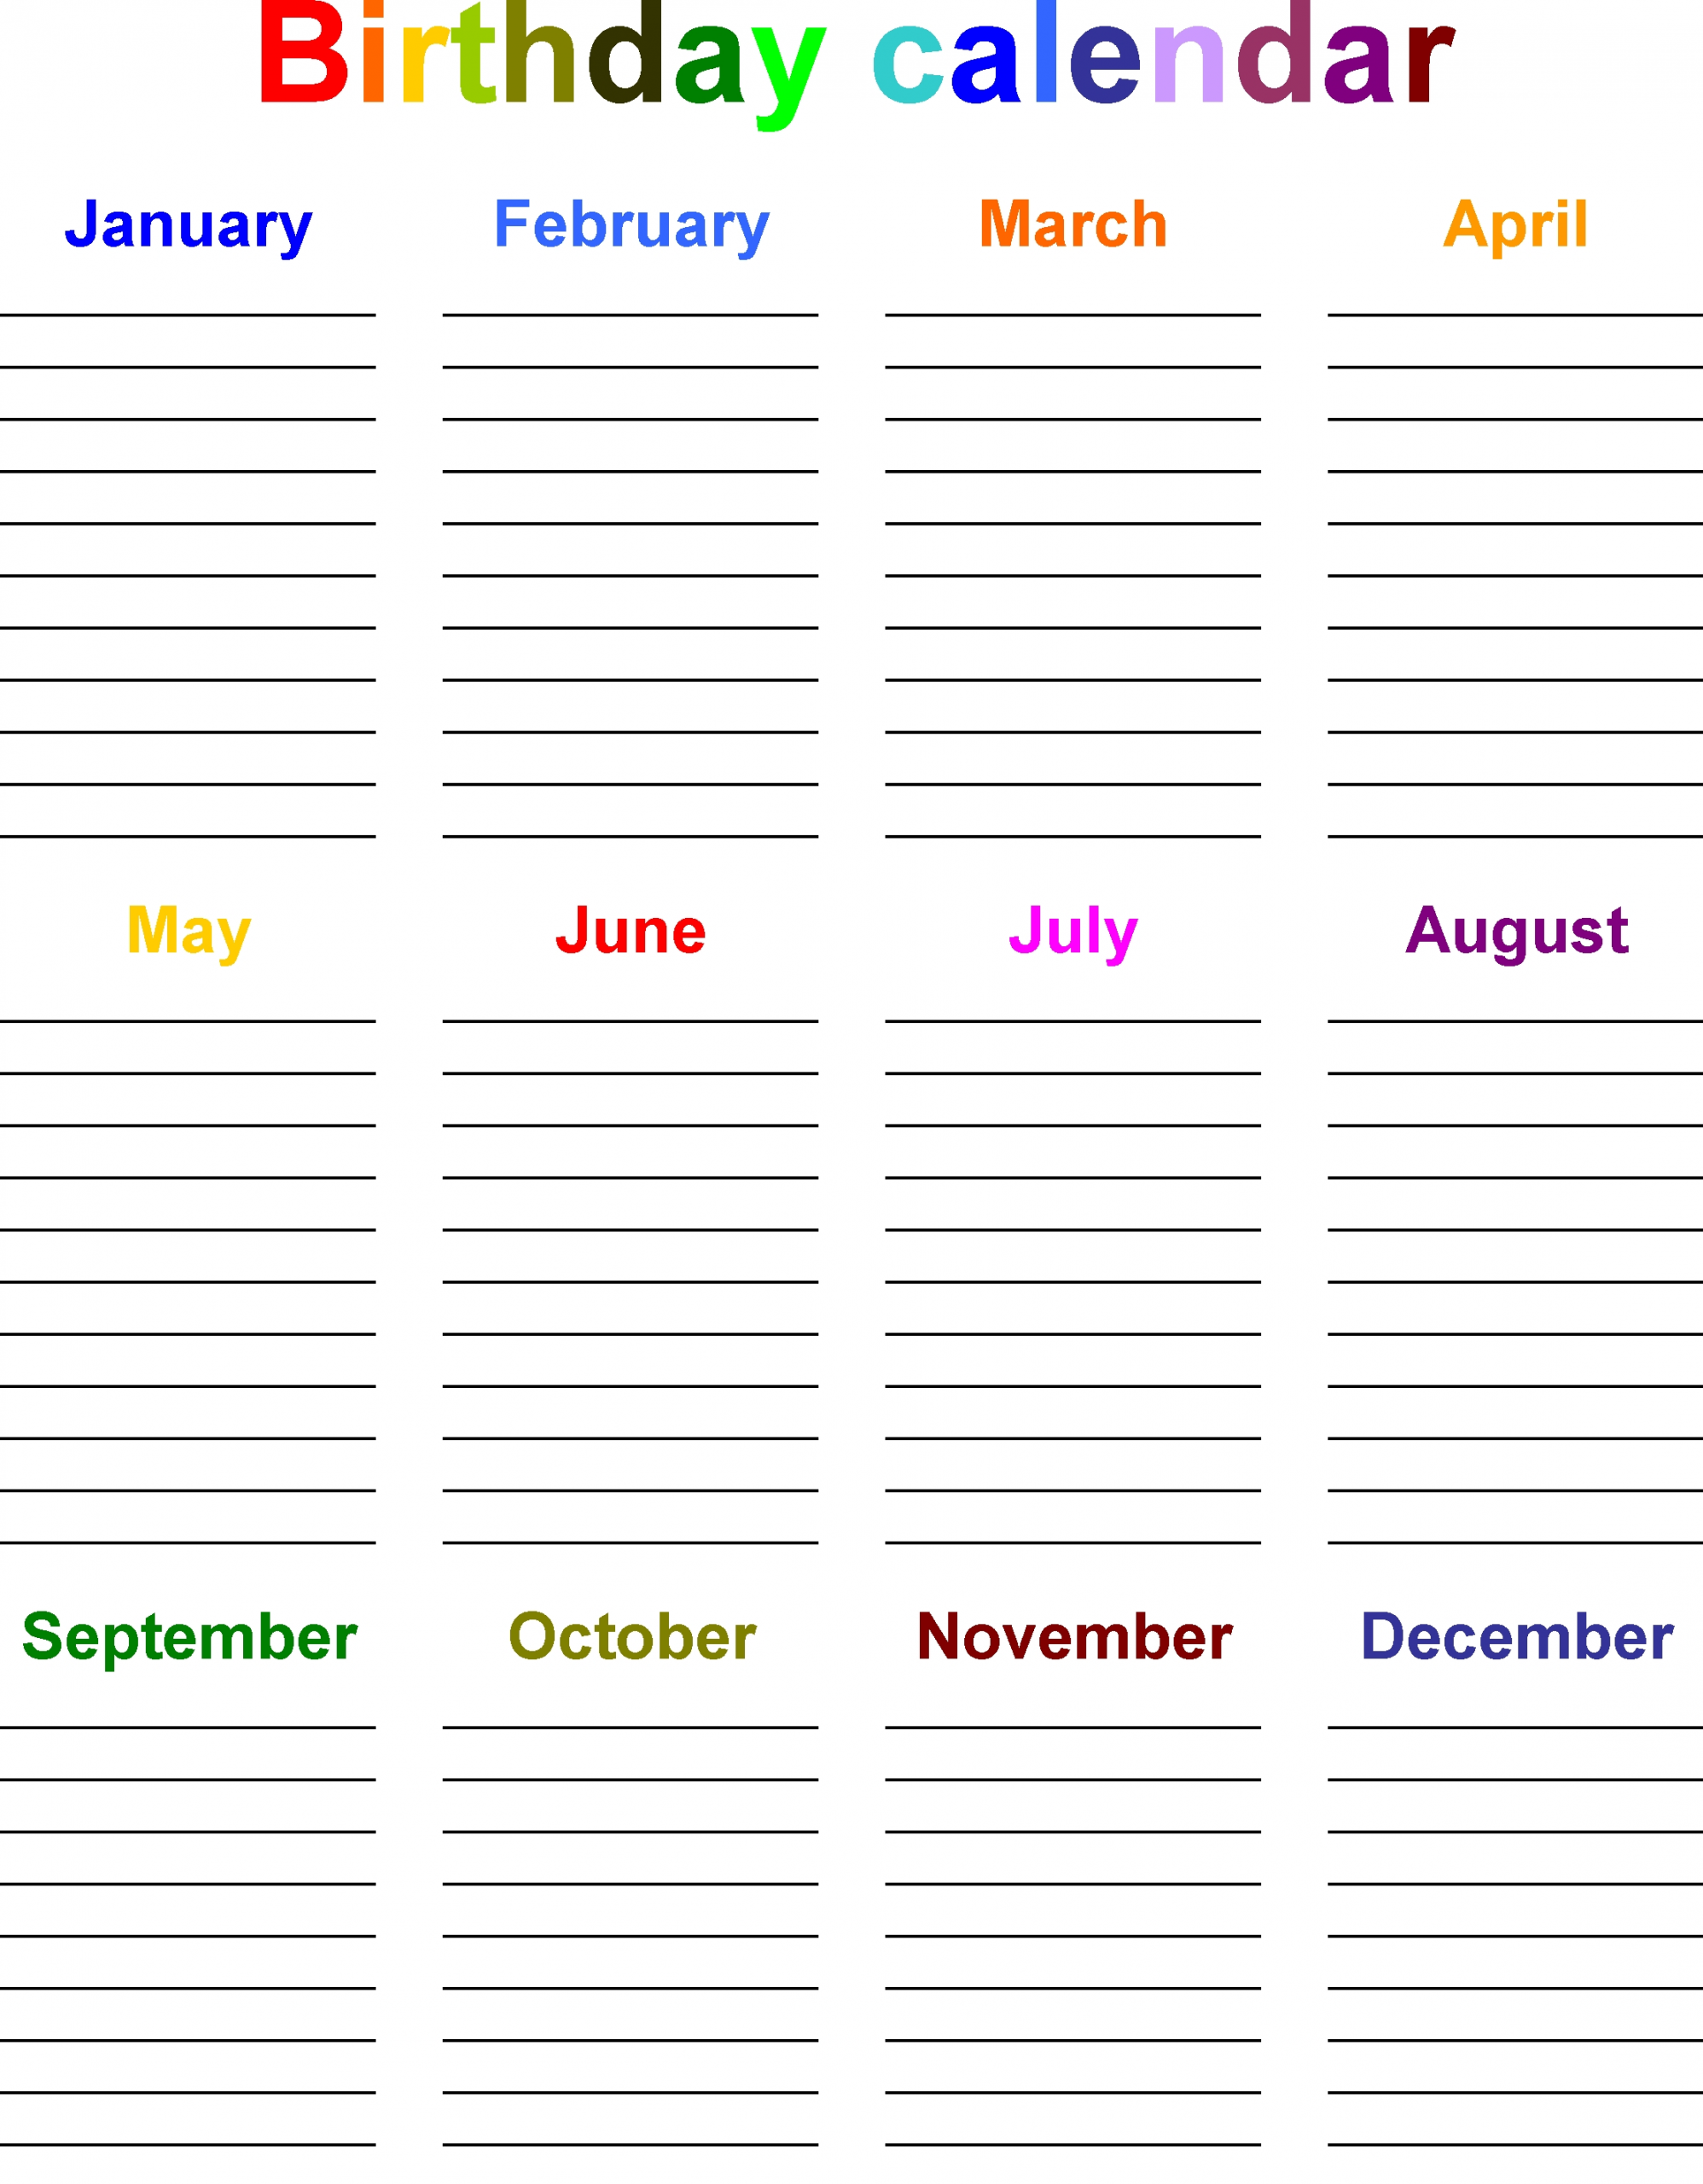 Birthday Calendar Template Free Microsoft Word | Calendar